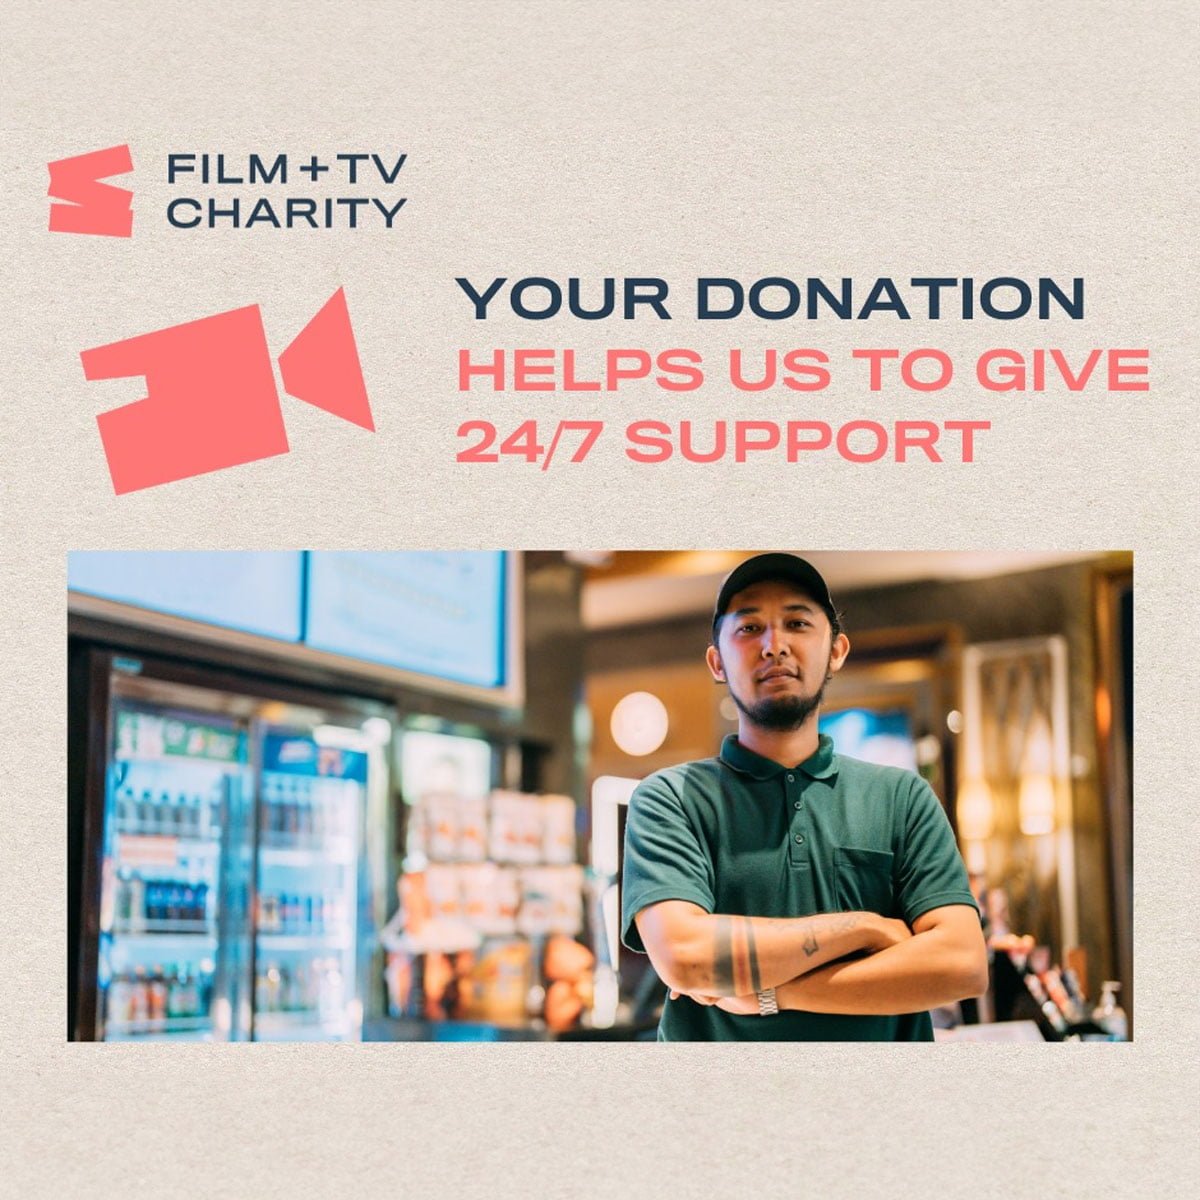 Film + TV Charity